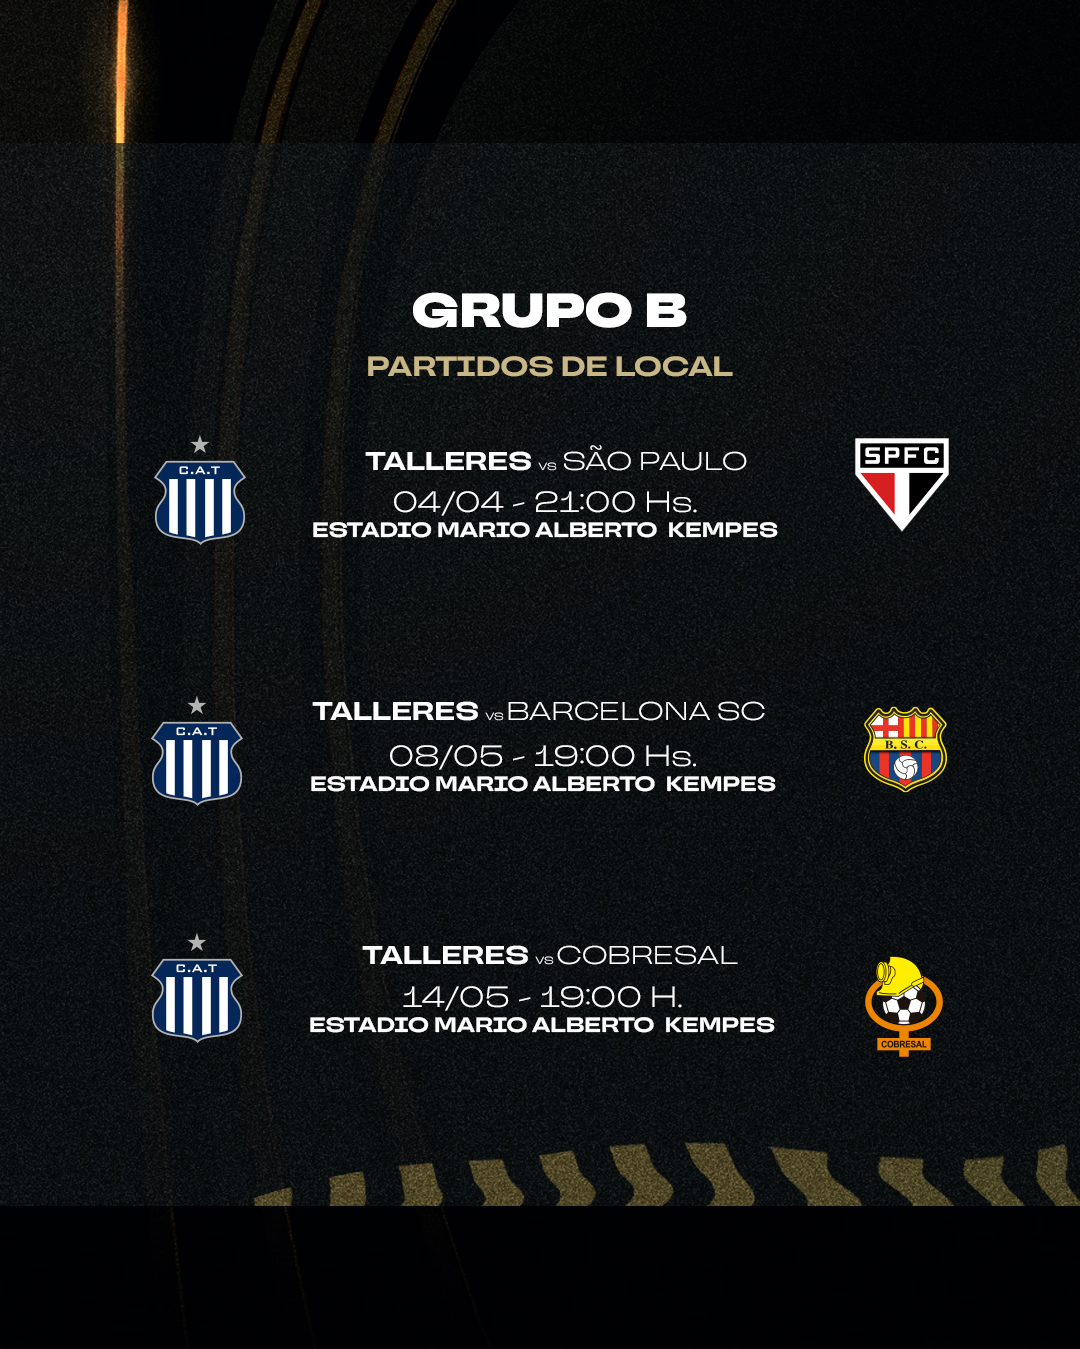 Talleres ofrecerá packs de entradas para la fase de grupos de la Copa Libertadores • Canal C